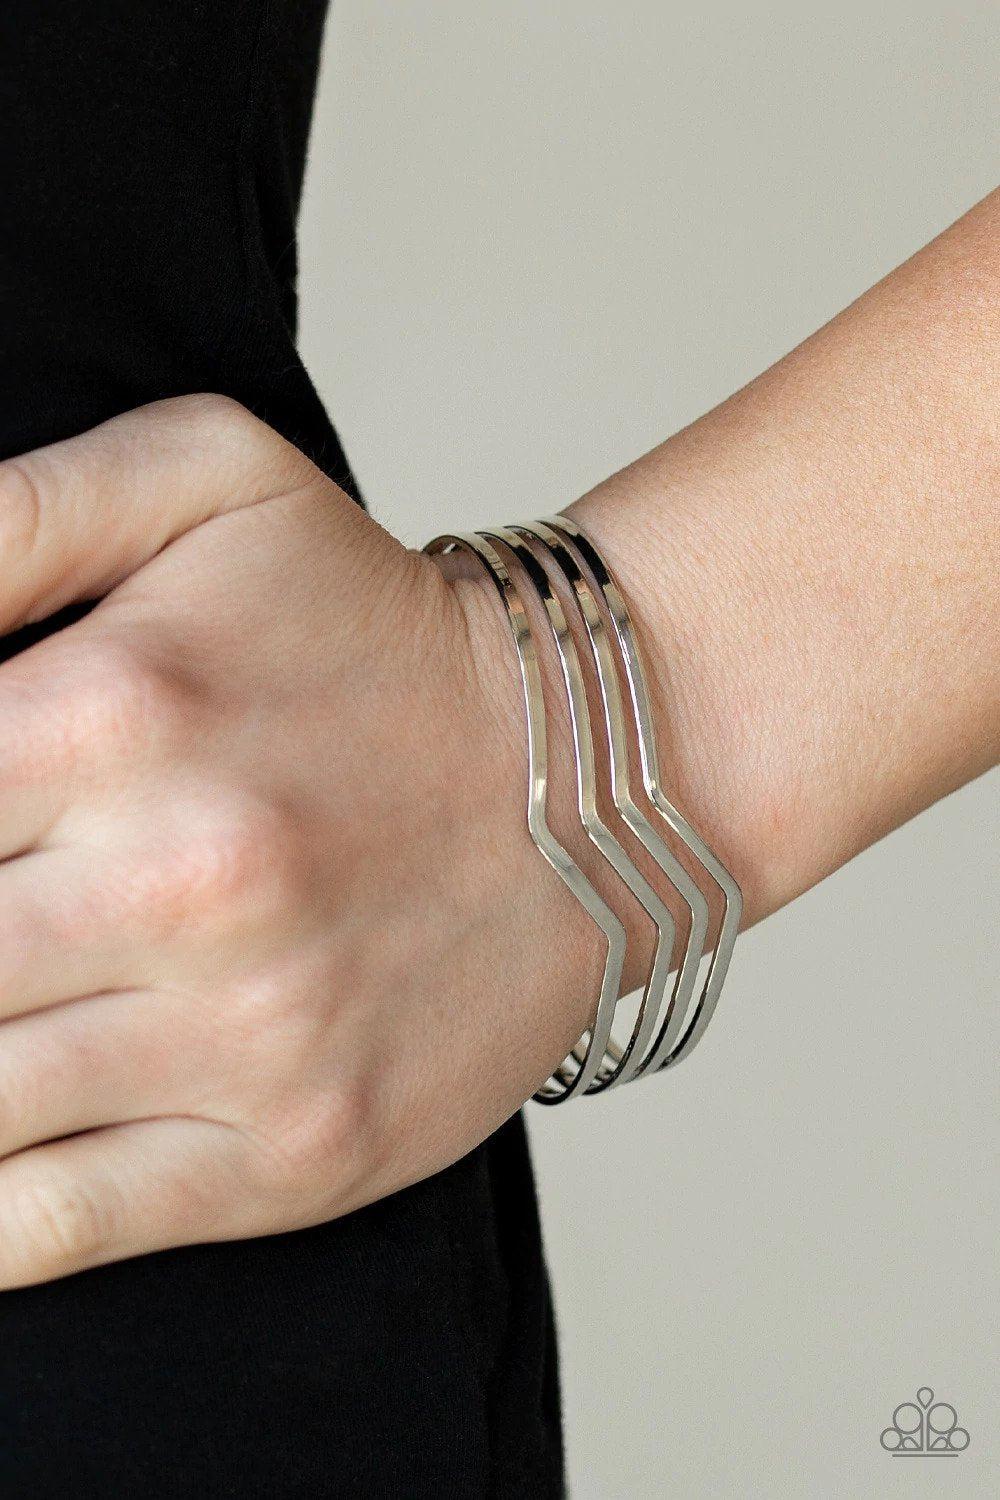 Waverunner Silver Cuff Bracelet - Paparazzi Accessories- lightbox - CarasShop.com - $5 Jewelry by Cara Jewels